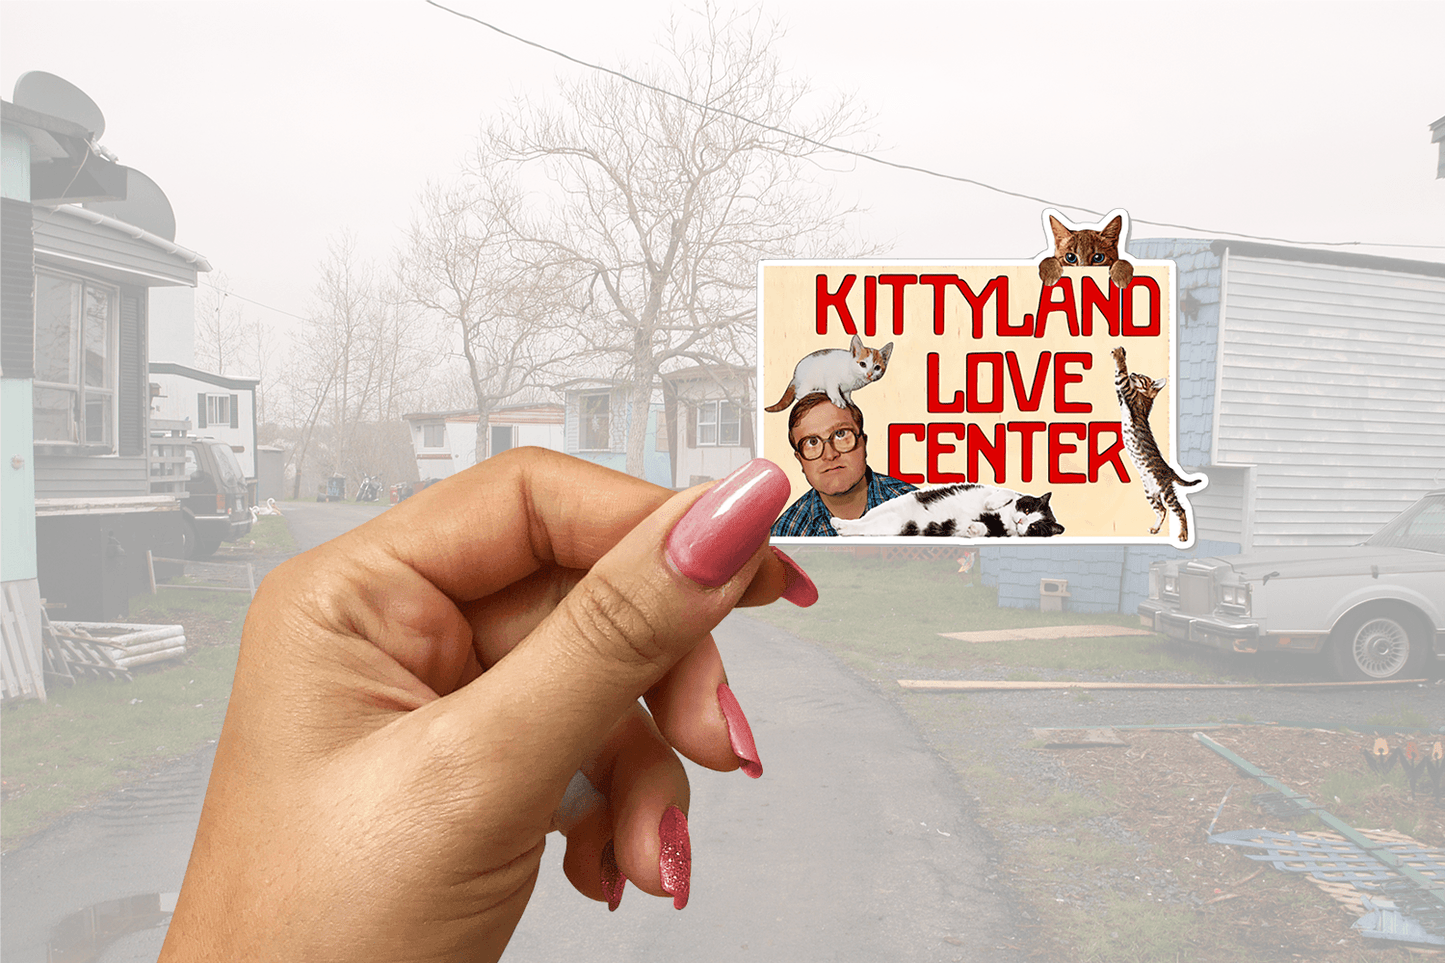 Trailer Park Boys - Kittyland Love Center